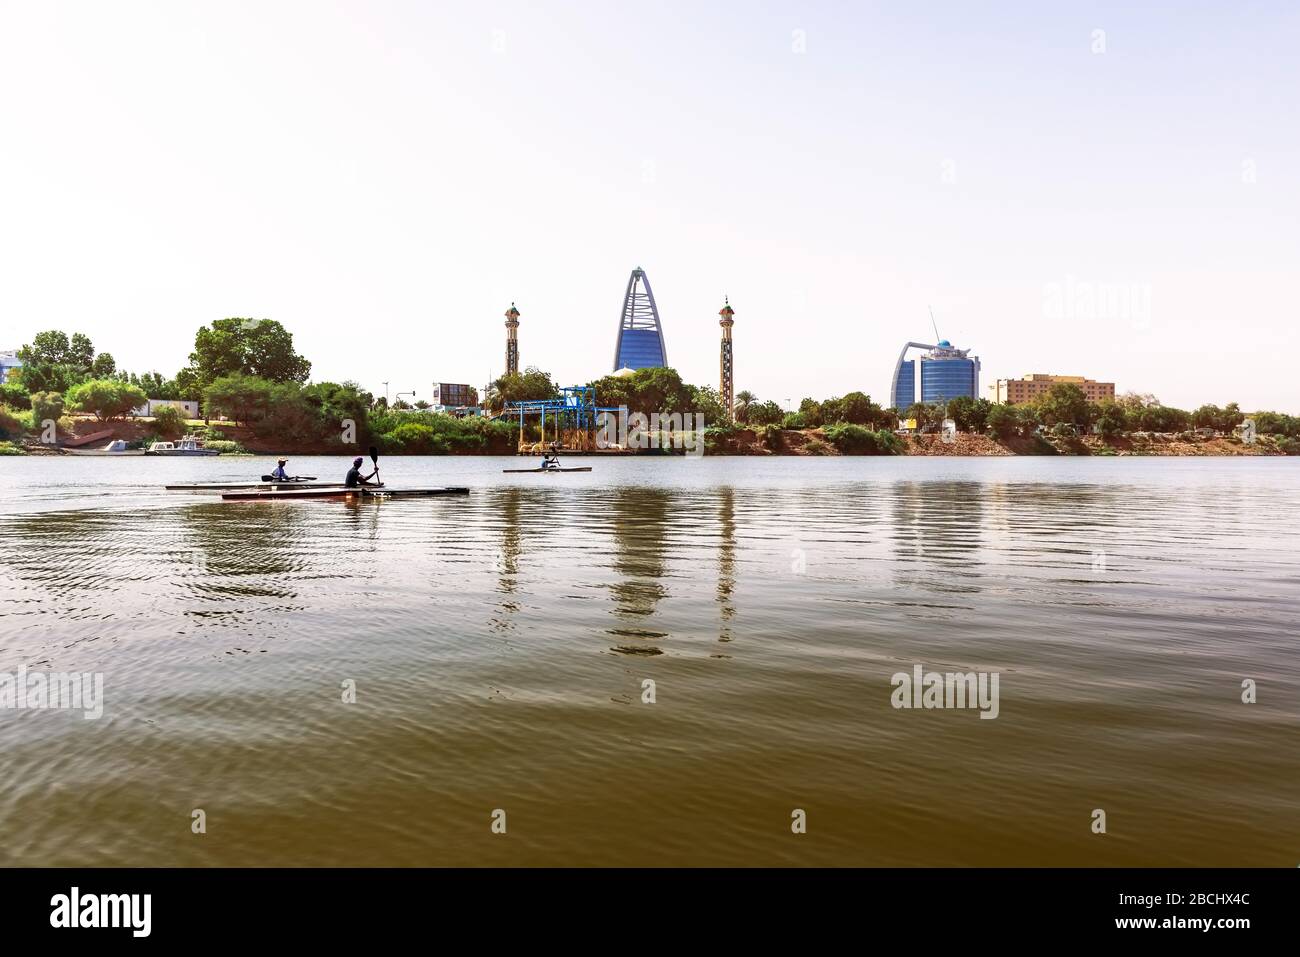 Khartoum, Sudan - January 29, 2015: Local people kayaking on the river Nile in Khartoum, Sudan. Stock Photo